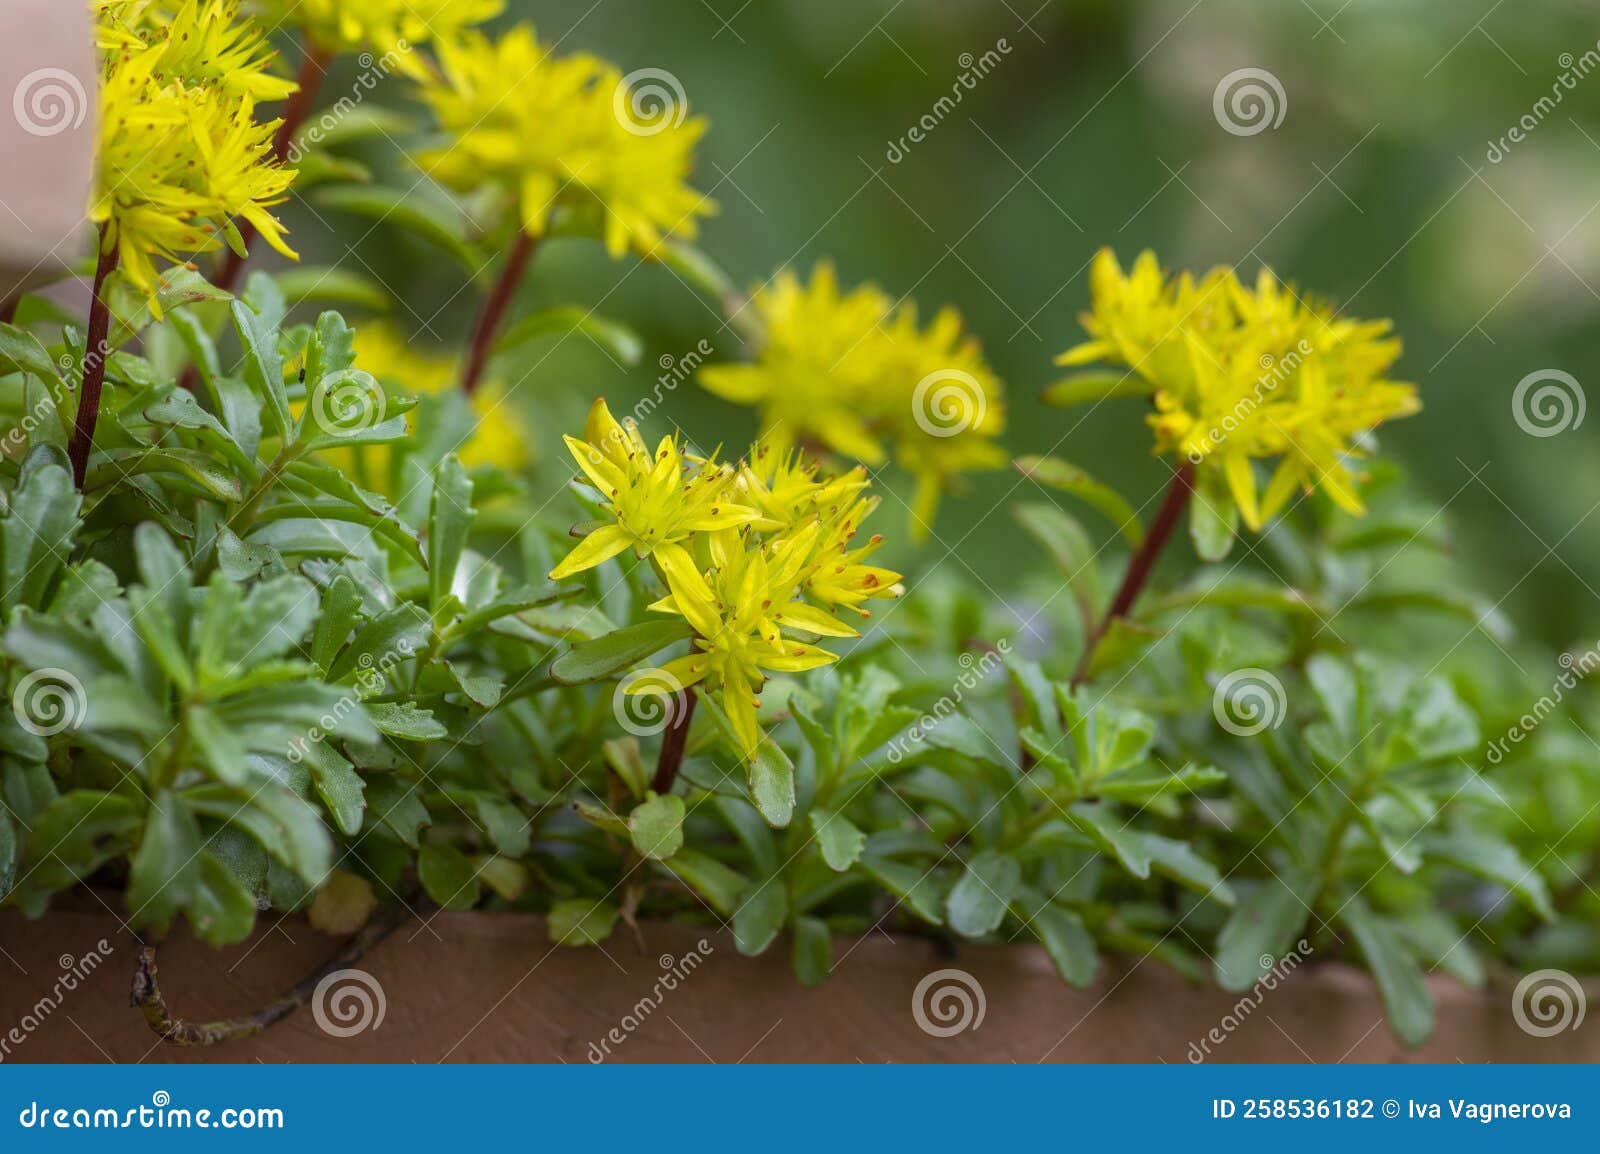 Sedum Floriferum Bright Yellow Orange Stonecrop Flowers in Bloom, Small ...